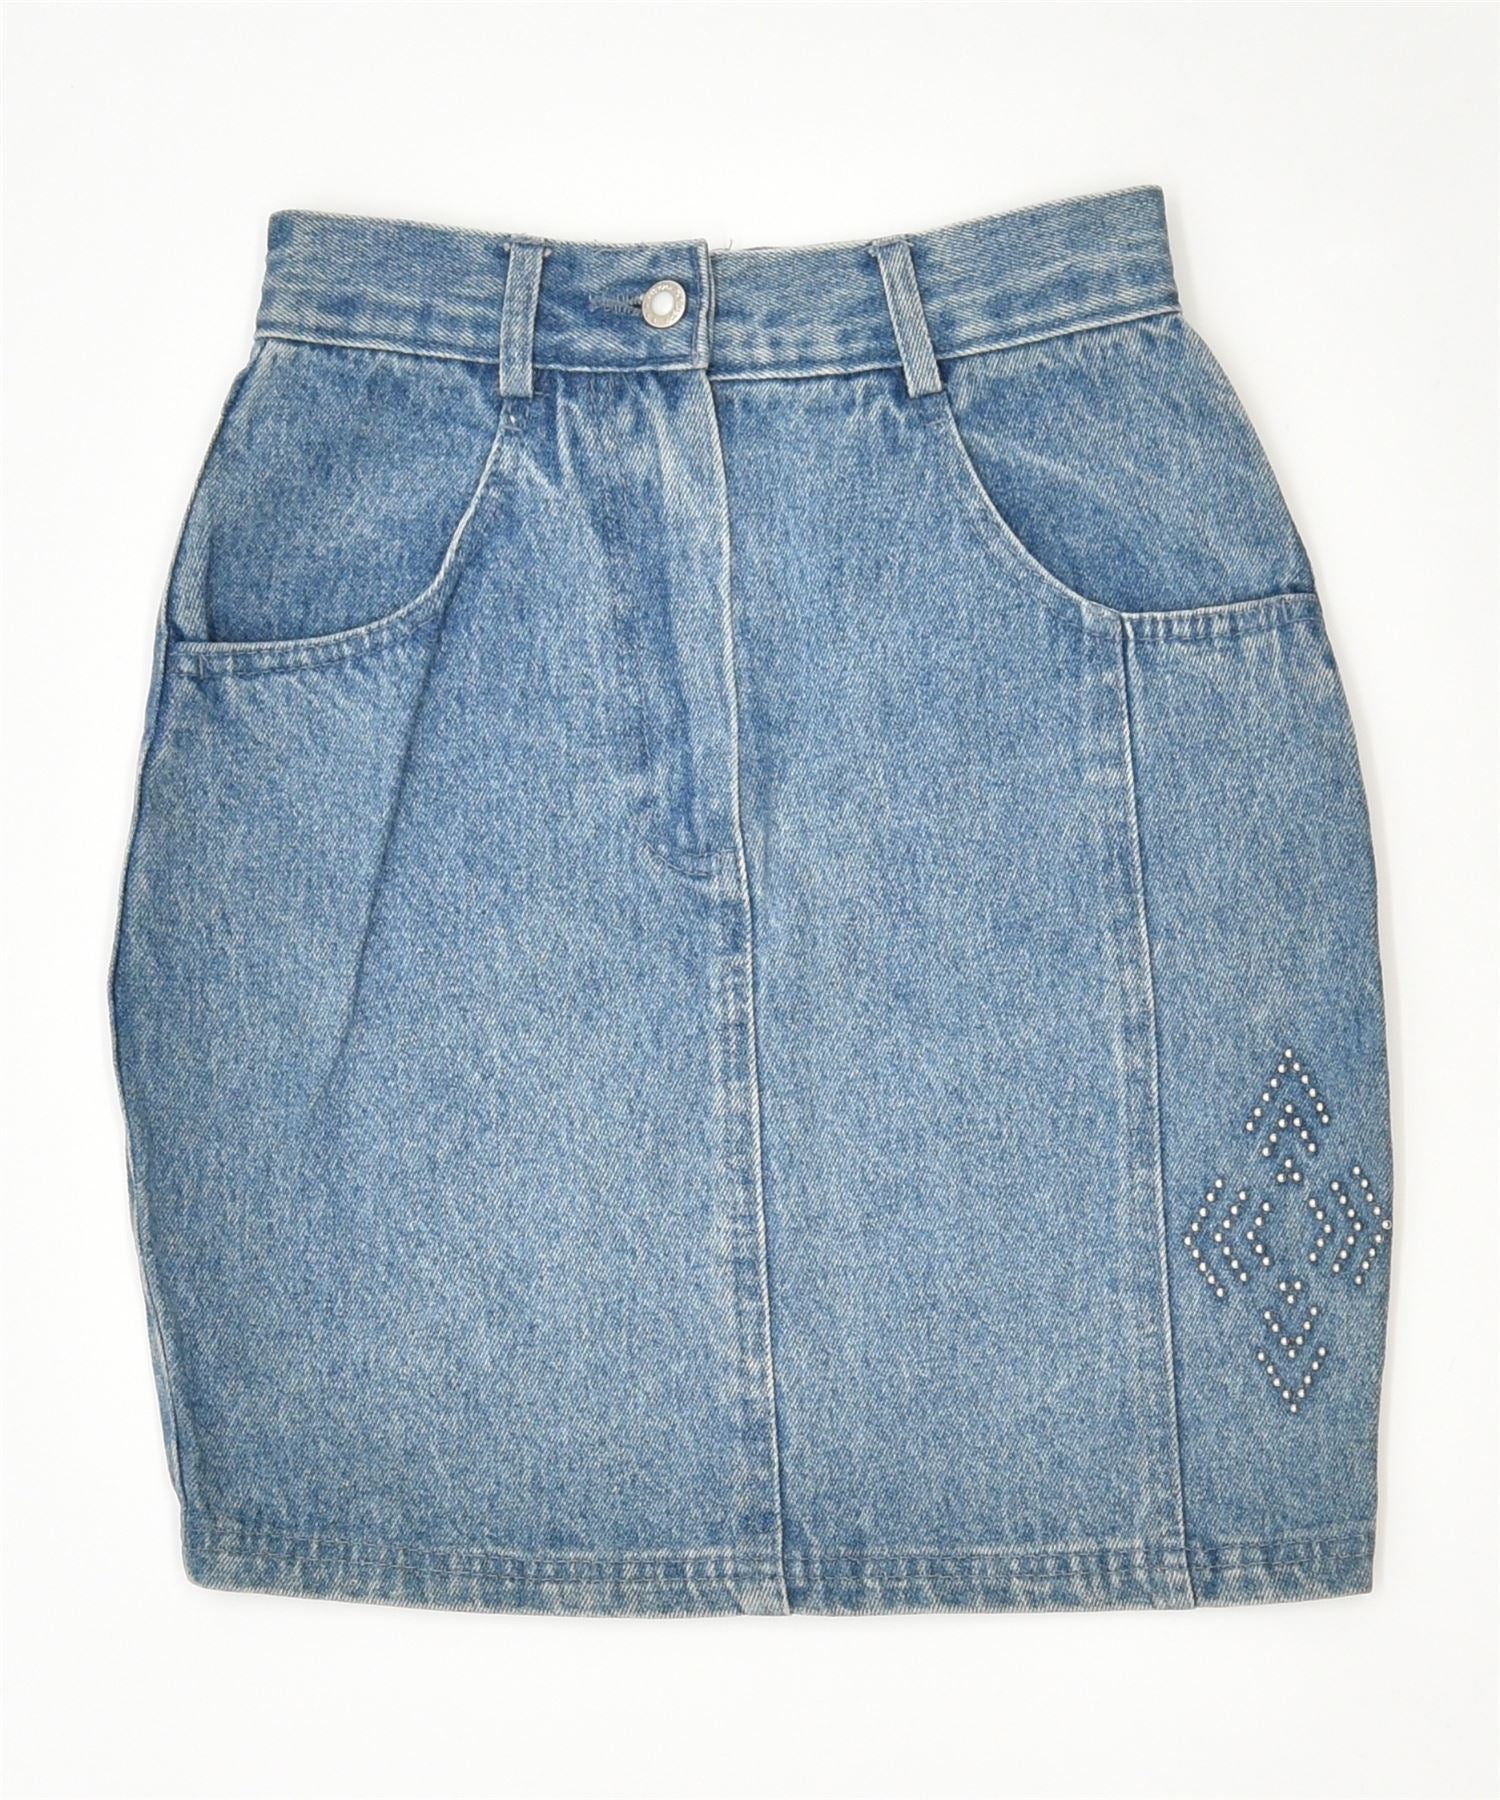 Wilfred Free Women's Denim Skirt Jeans Blue White Size 24 Lot 3 - Shop  Linda's Stuff